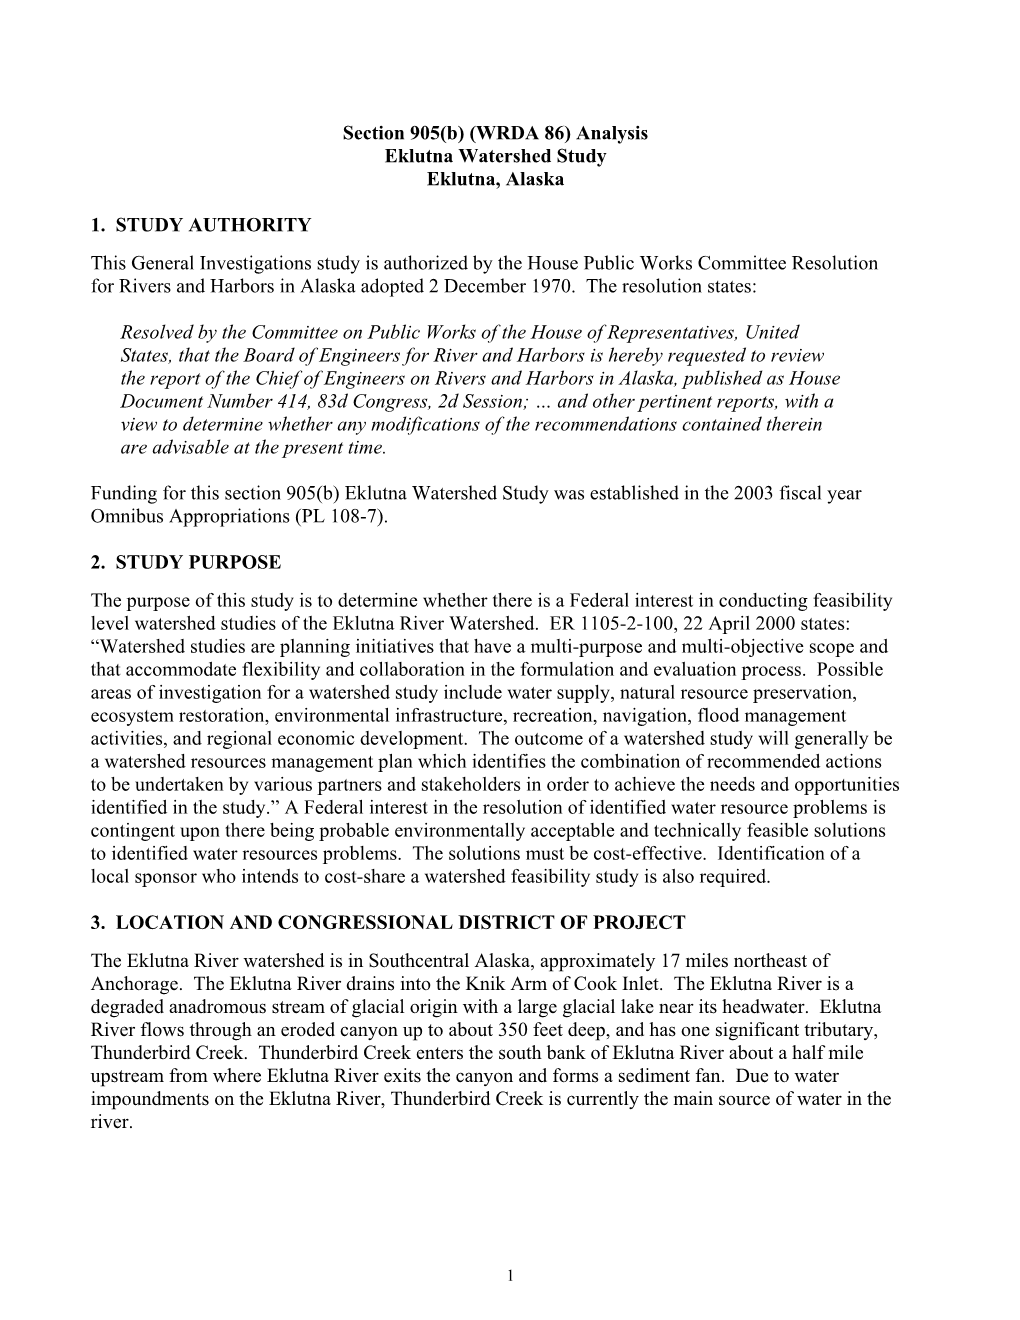 Section 905(B) (WRDA 86) Analysis Eklutna Watershed Study Eklutna, Alaska